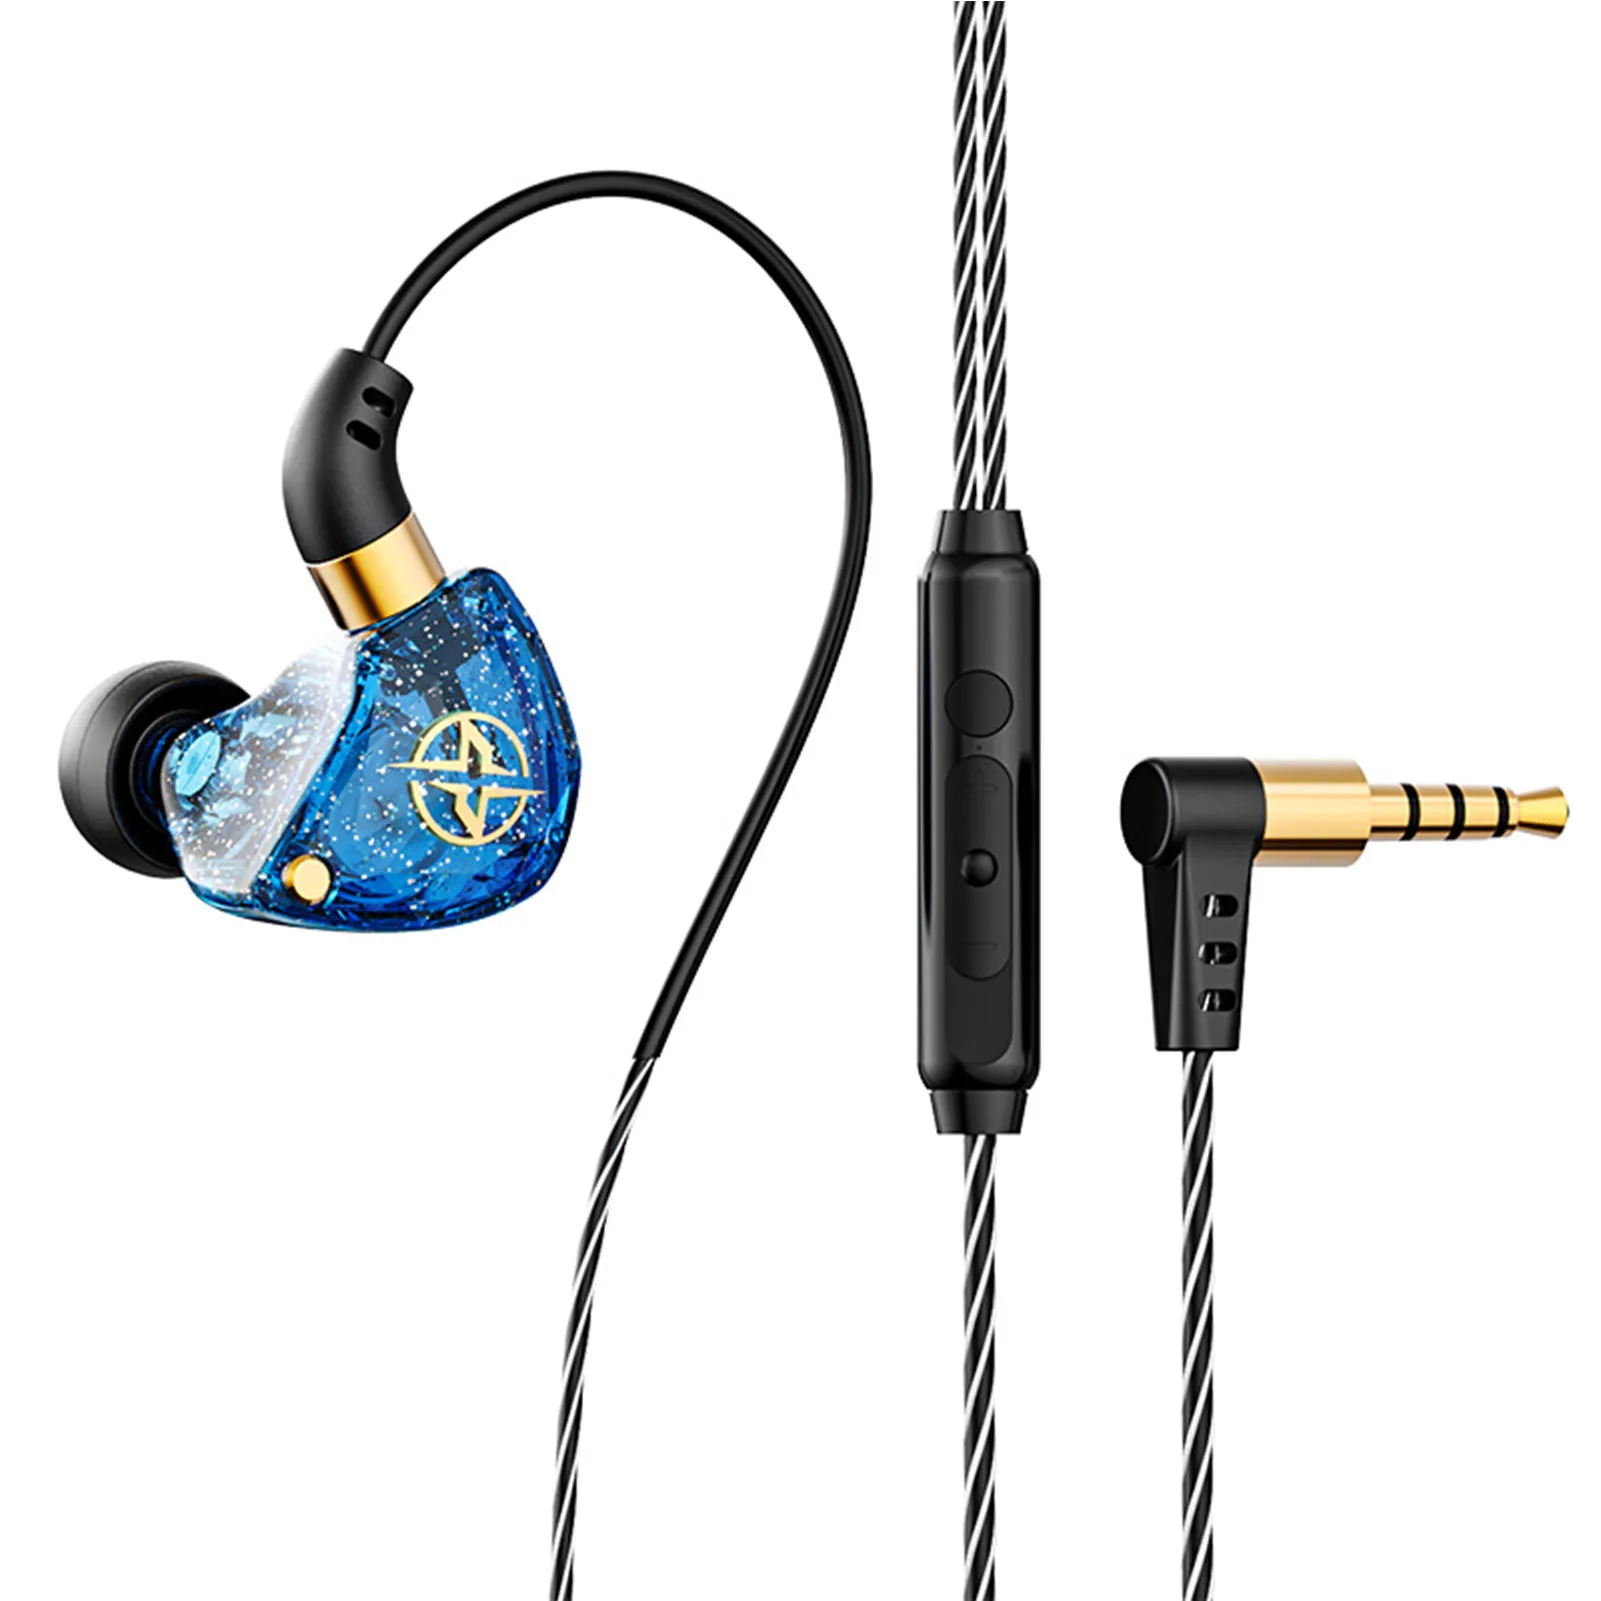 

Headphones In-Ear Monitors Noise-isolating Earbud HiFi Bass Immersive Sound Earphones Deep Bass Stereo Sound Headset Ergonomic